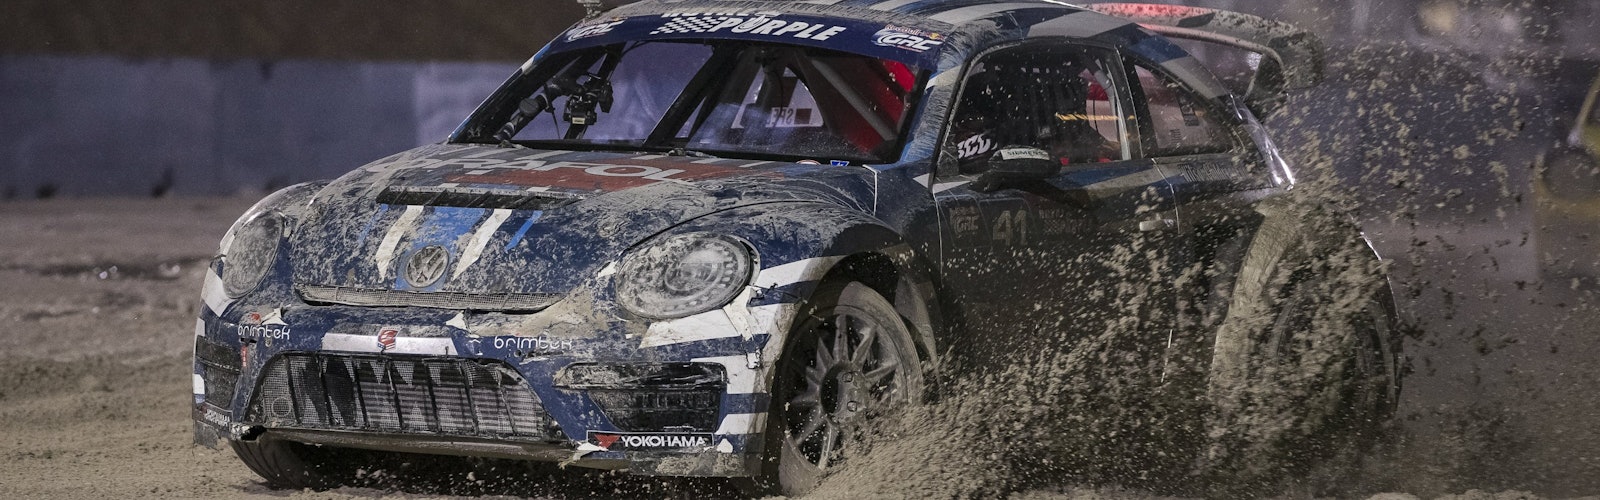 Scott Speed Andretti Autosport Volkswagen Beetle Las Vegas Global Rallycross Championship 2015